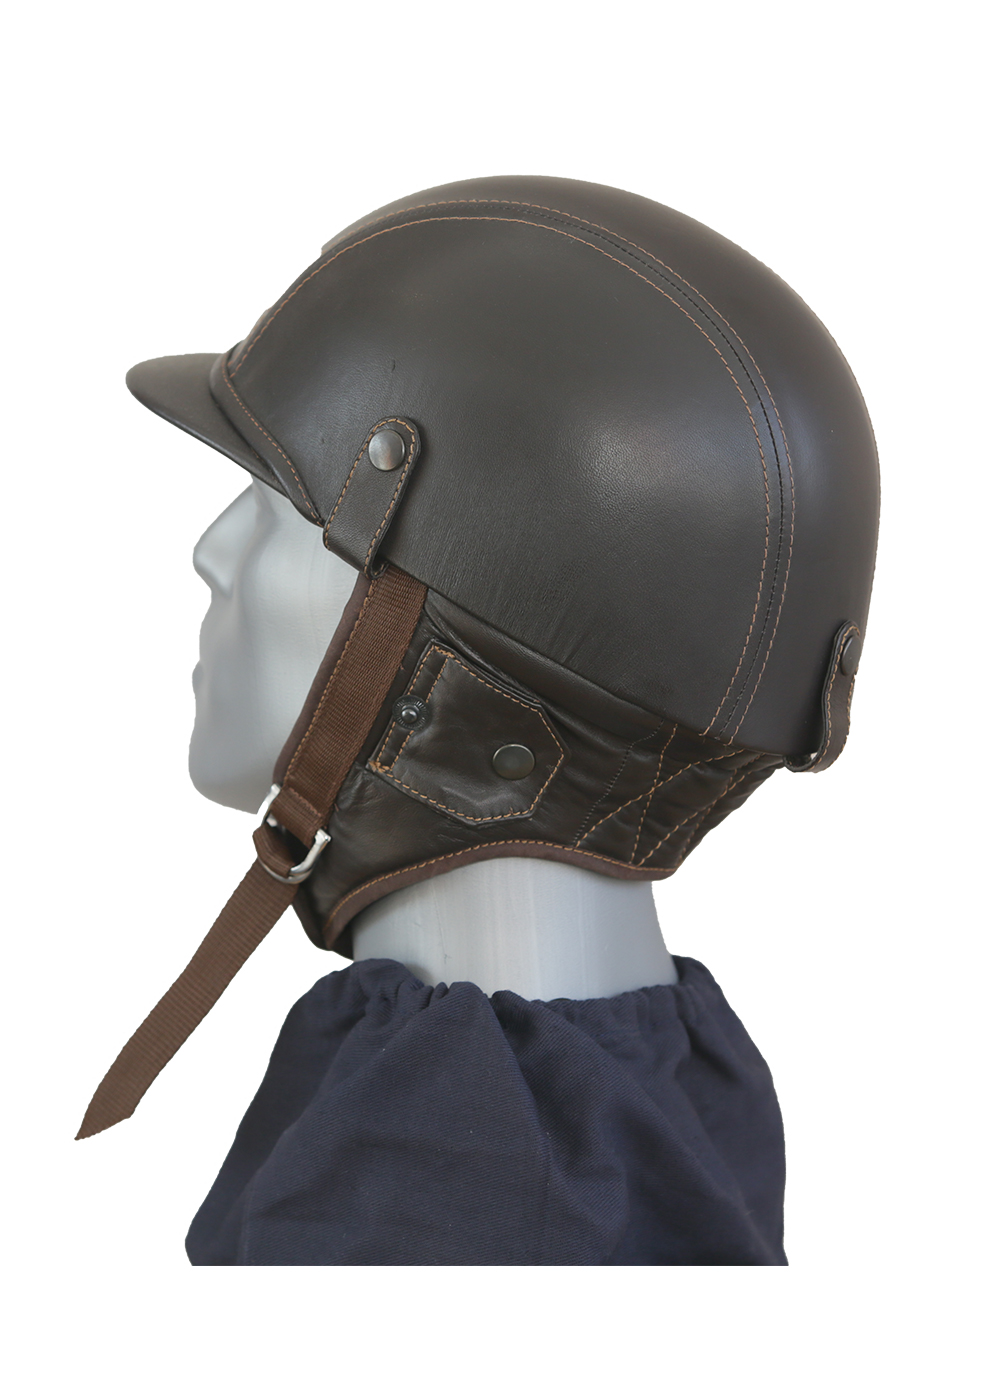 Oldtimer Helm mit braunem Nappaleder überzogen